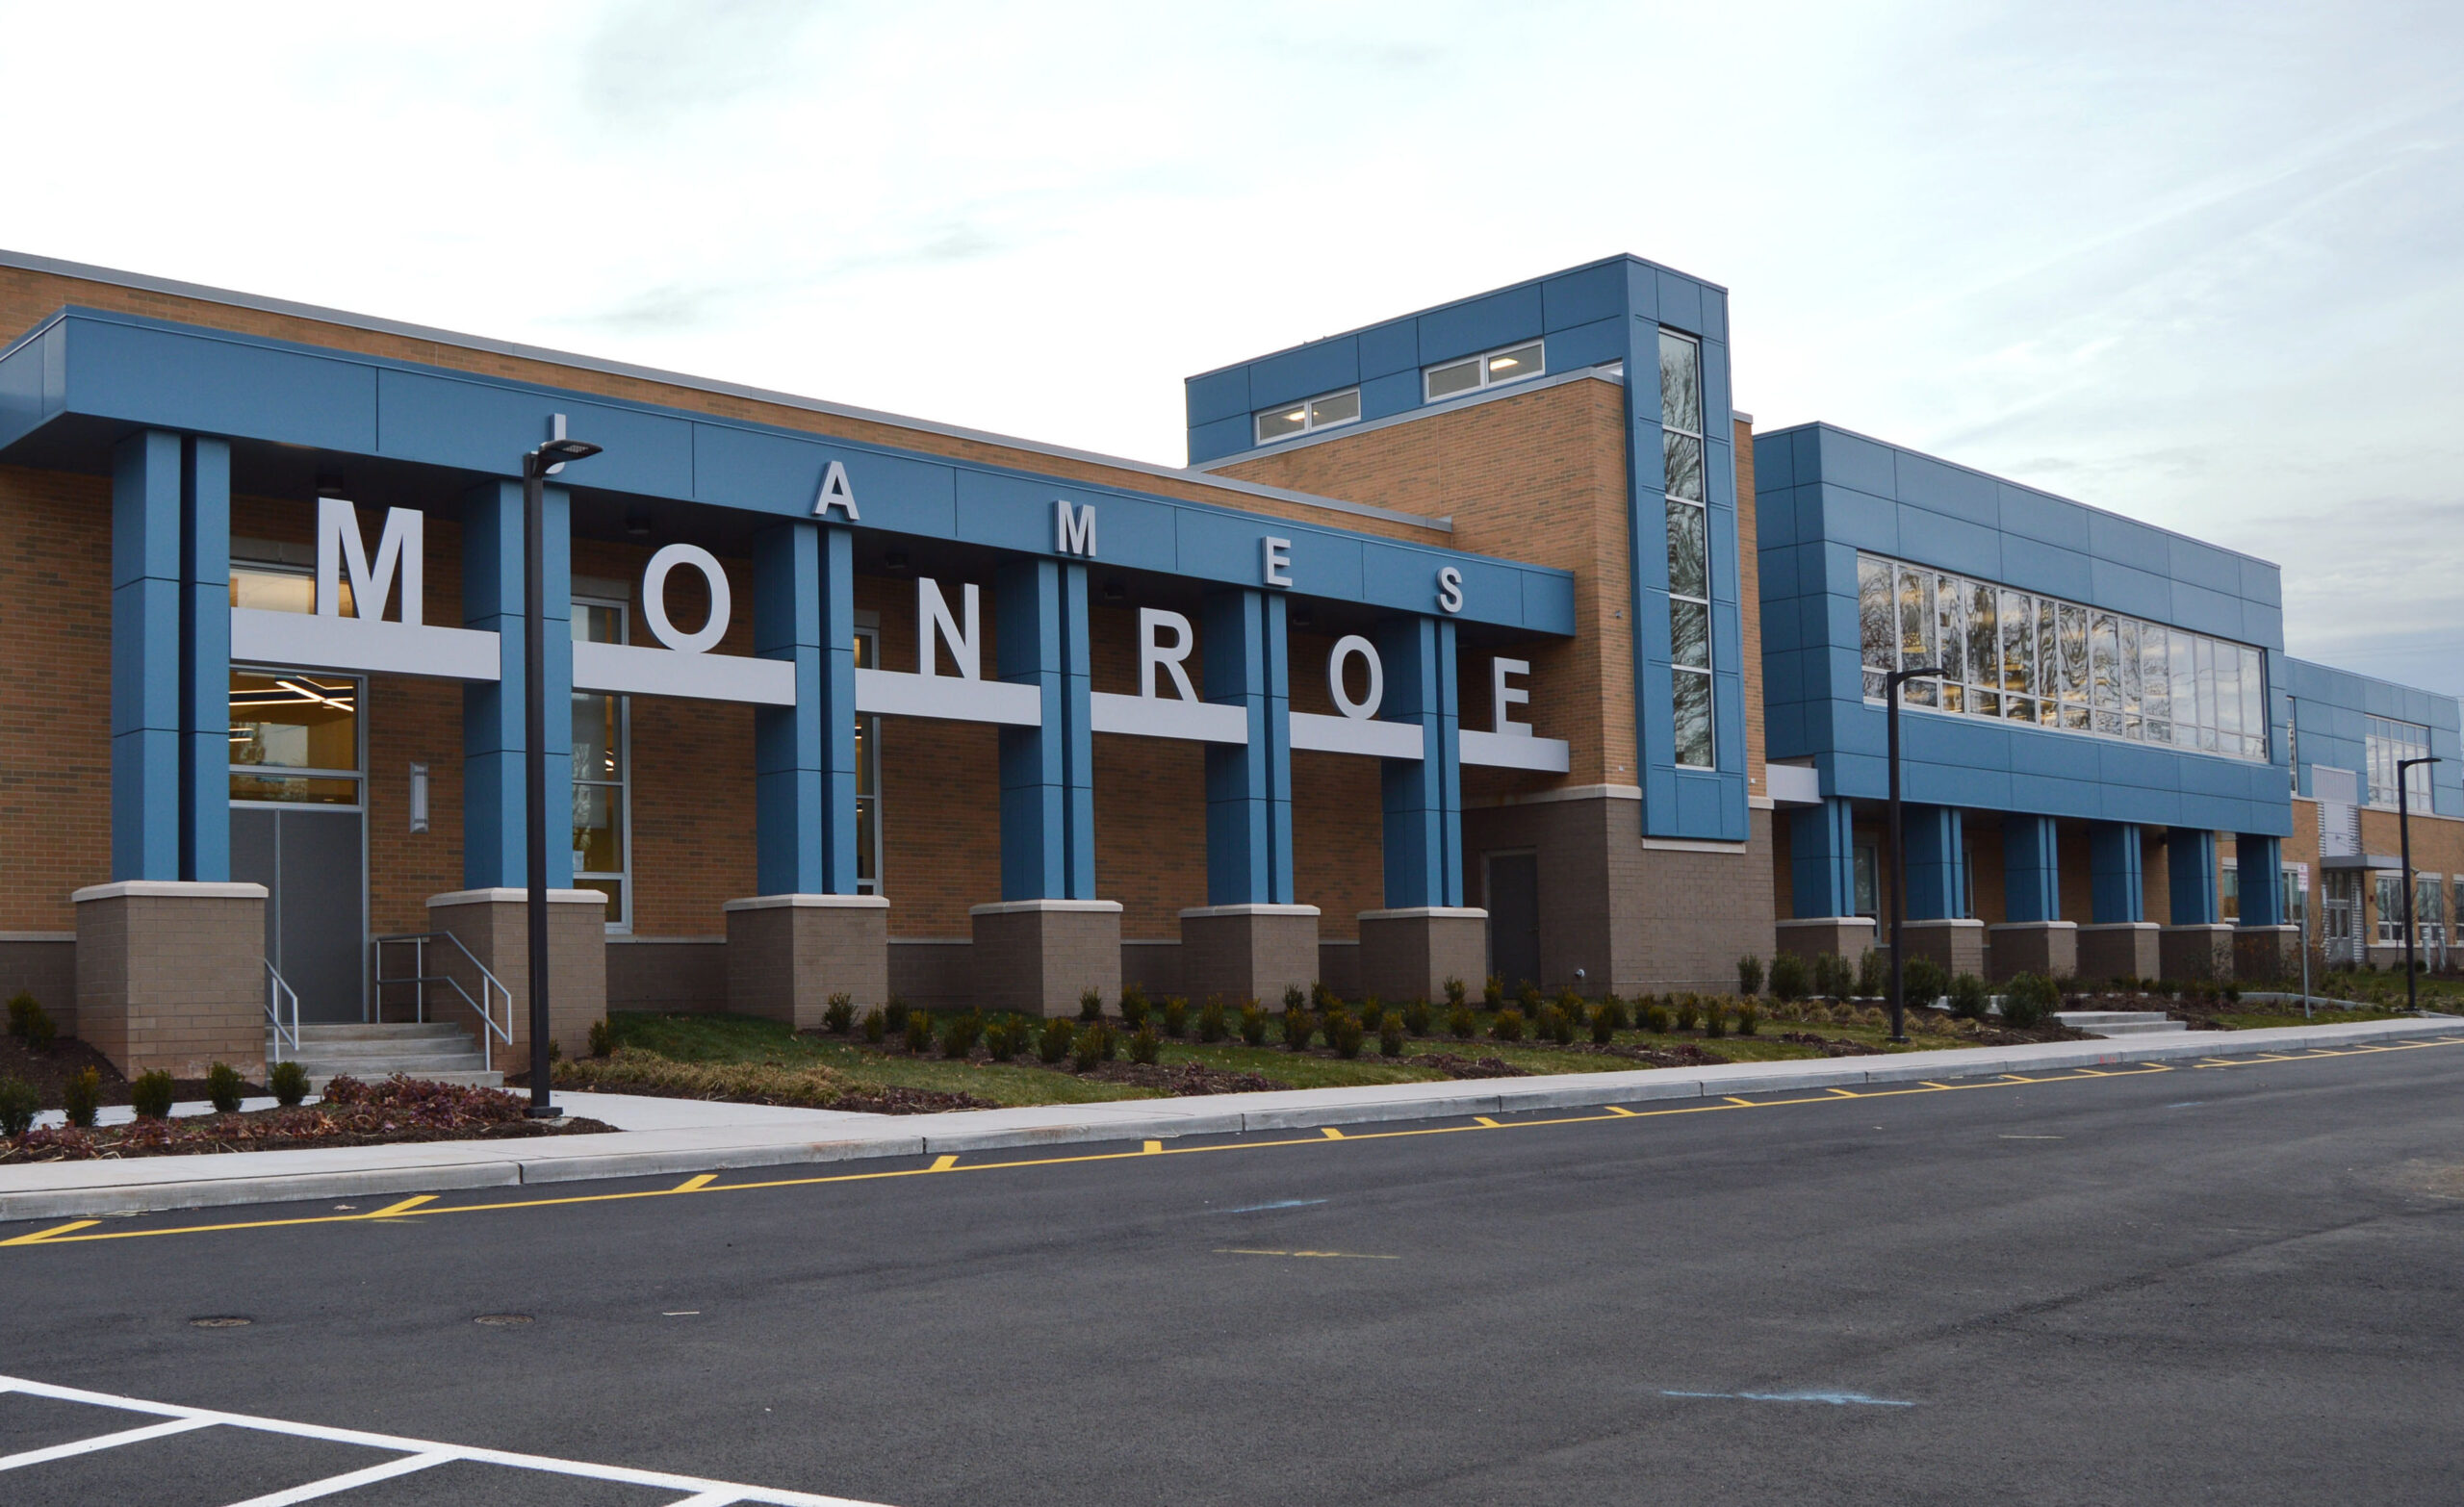 Design of New James Monroe Elementary School